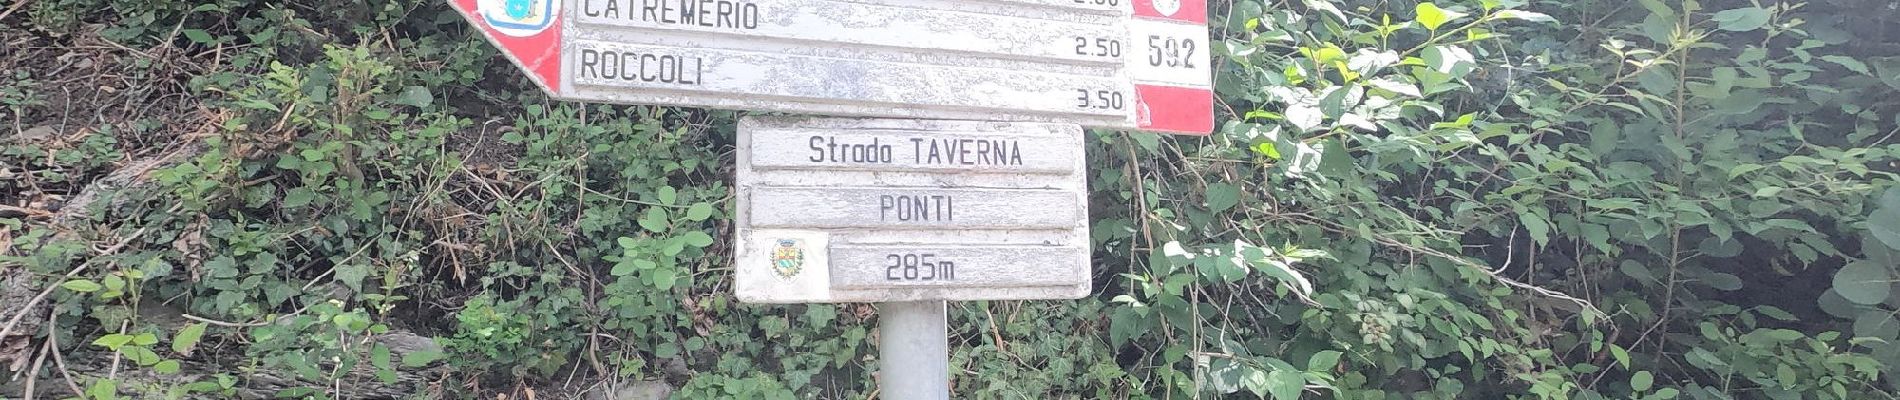 Randonnée A pied Val Brembilla - Sentiero 592: Ponti di S. Antonio - Roccoli Spadì, Strada Taverna - Photo